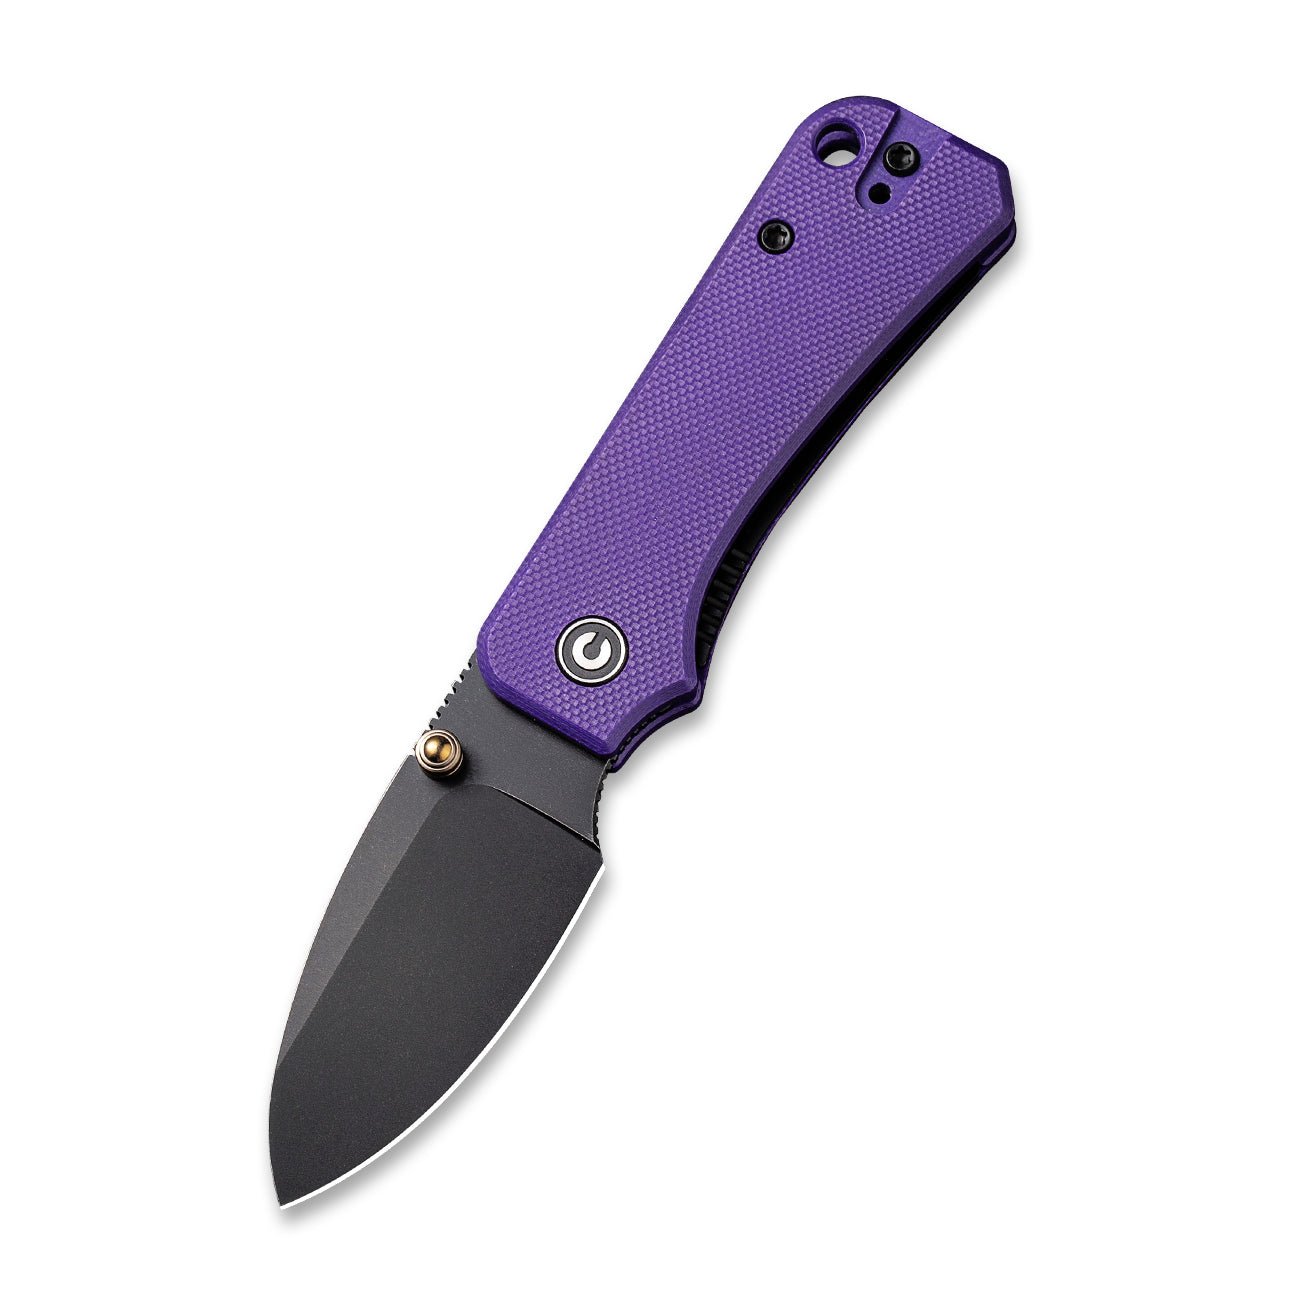 CIVIVI Baby Banter Nitro-V钢 G10柄 C19068S-4 紫色 511